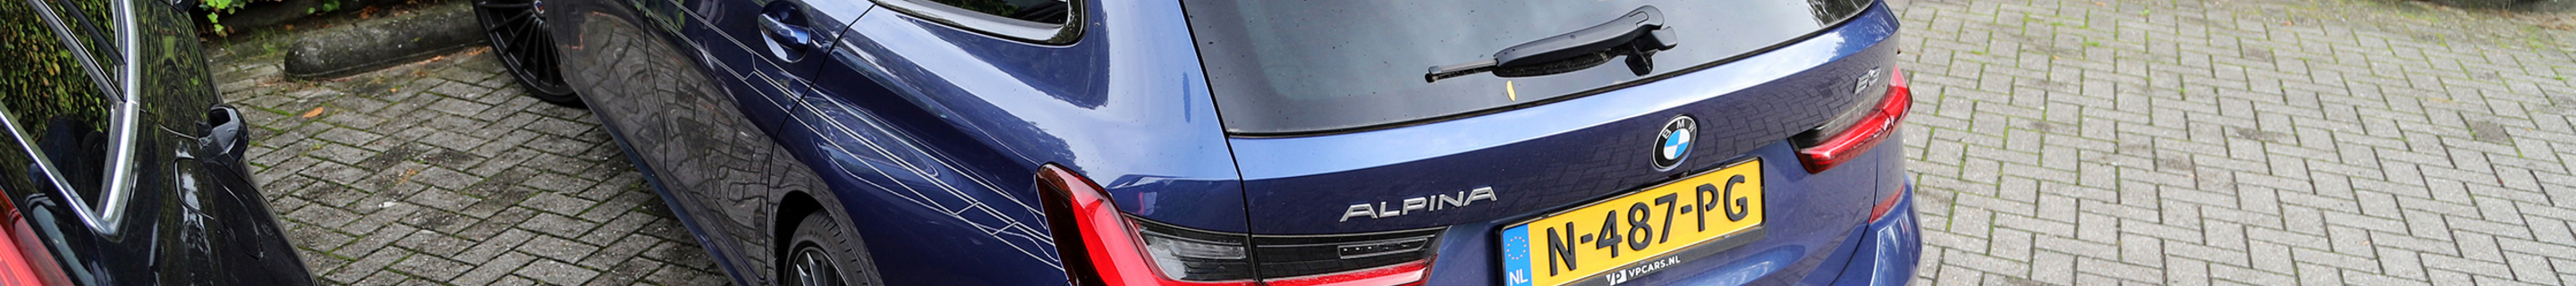 Alpina B3 BiTurbo Touring 2020